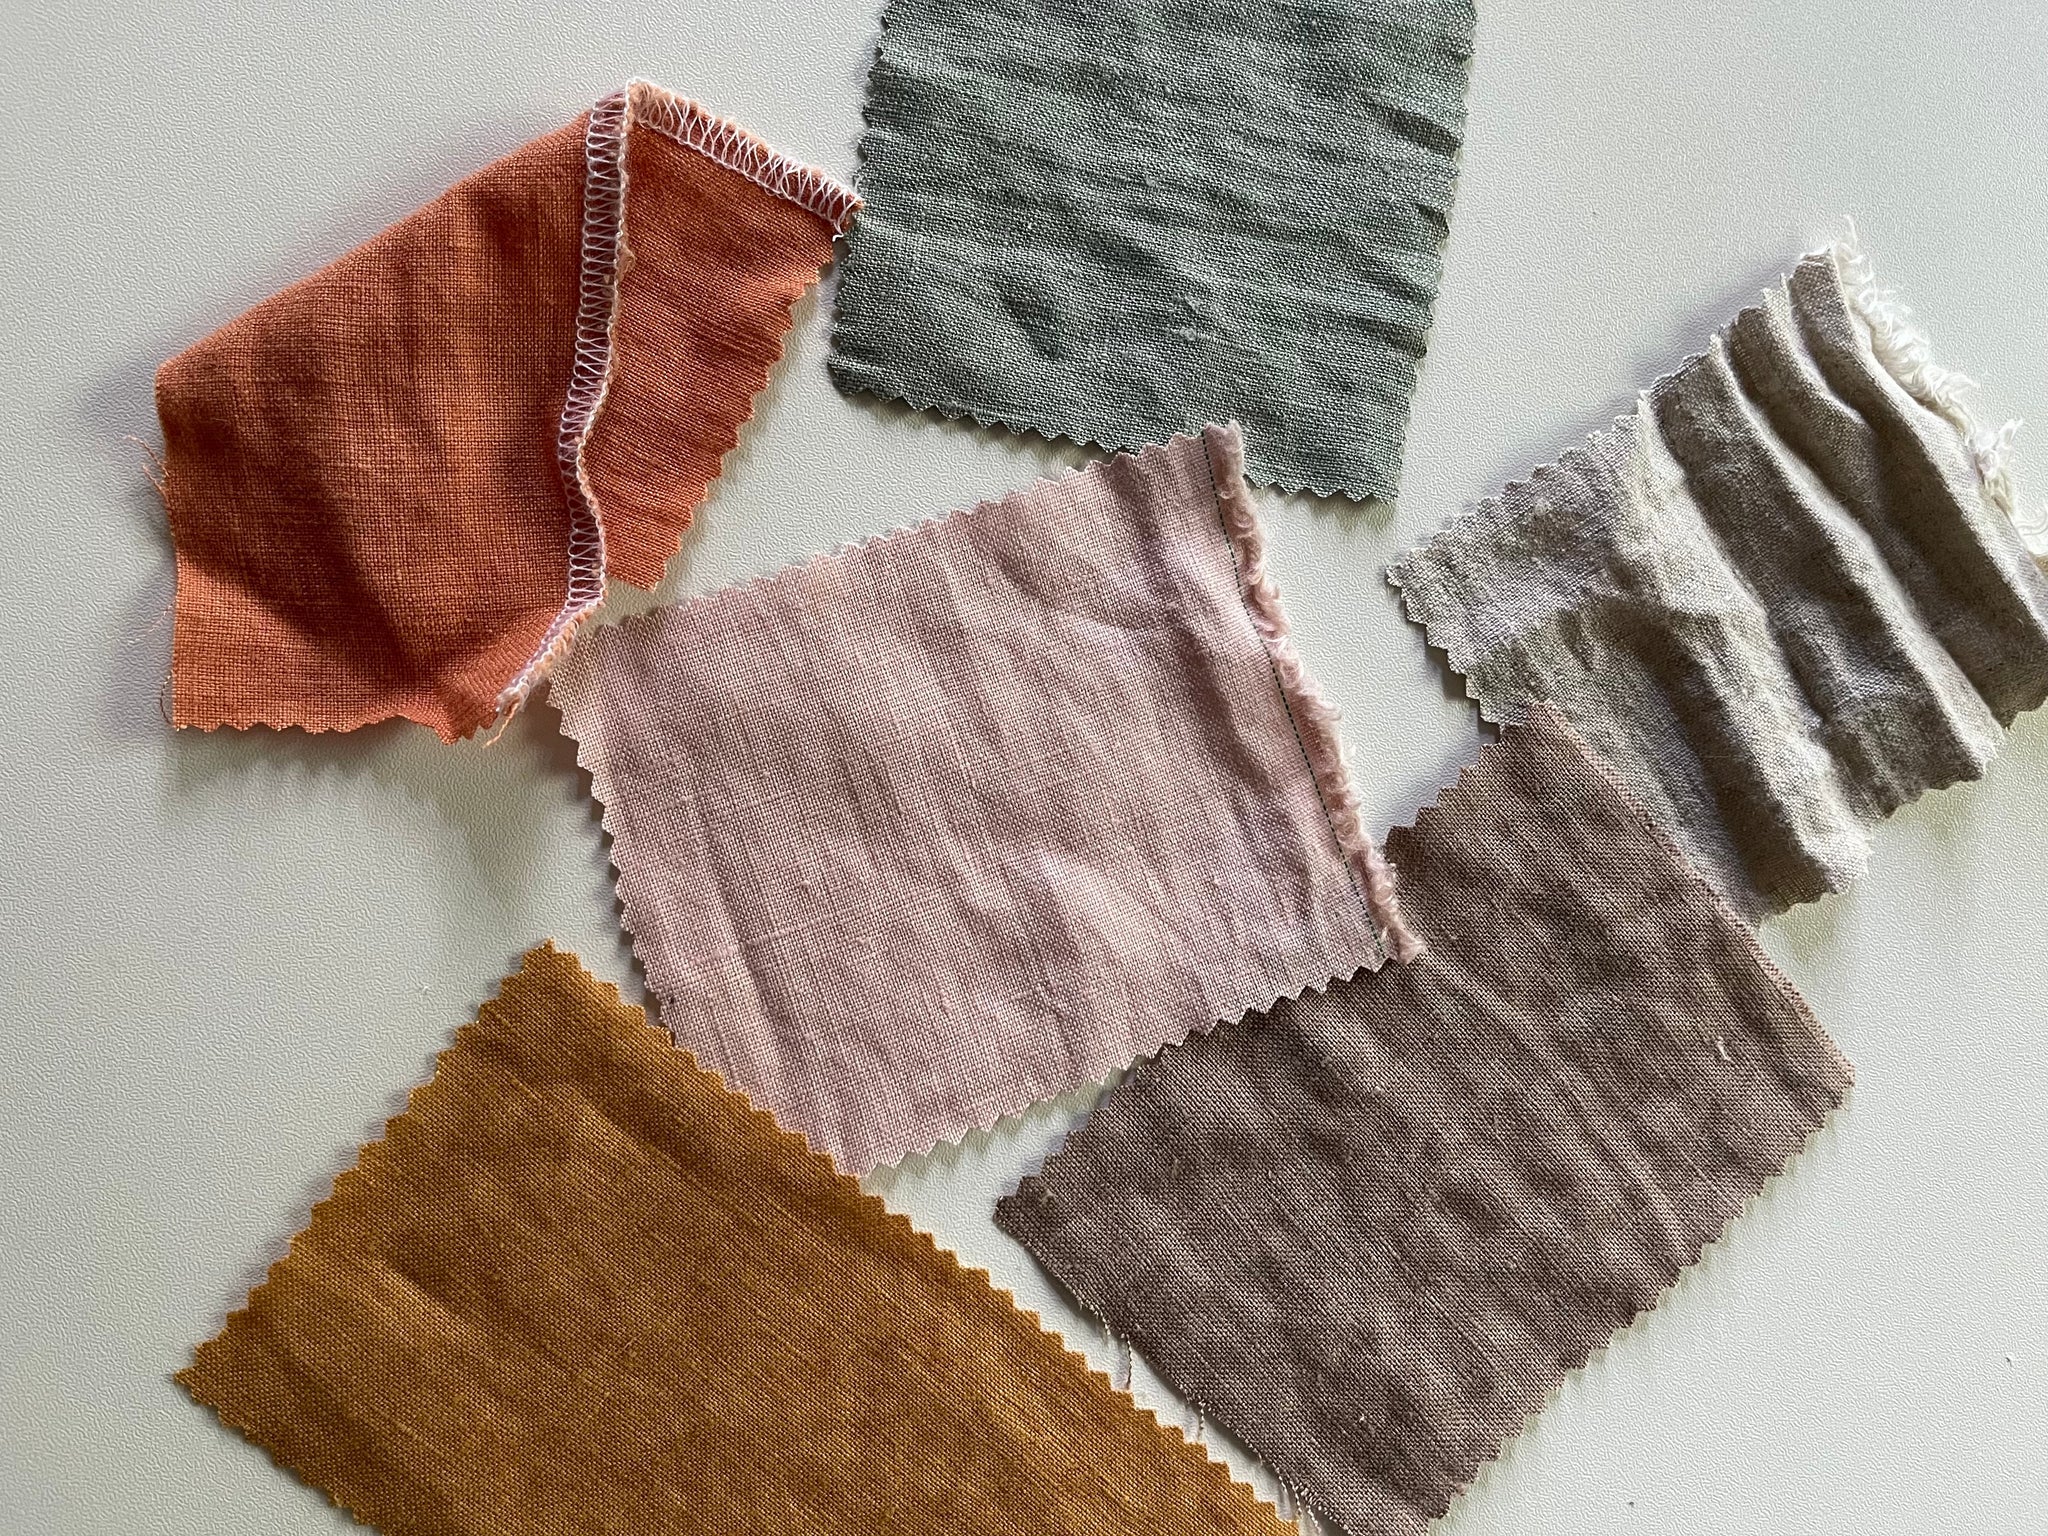 Fabric Samples